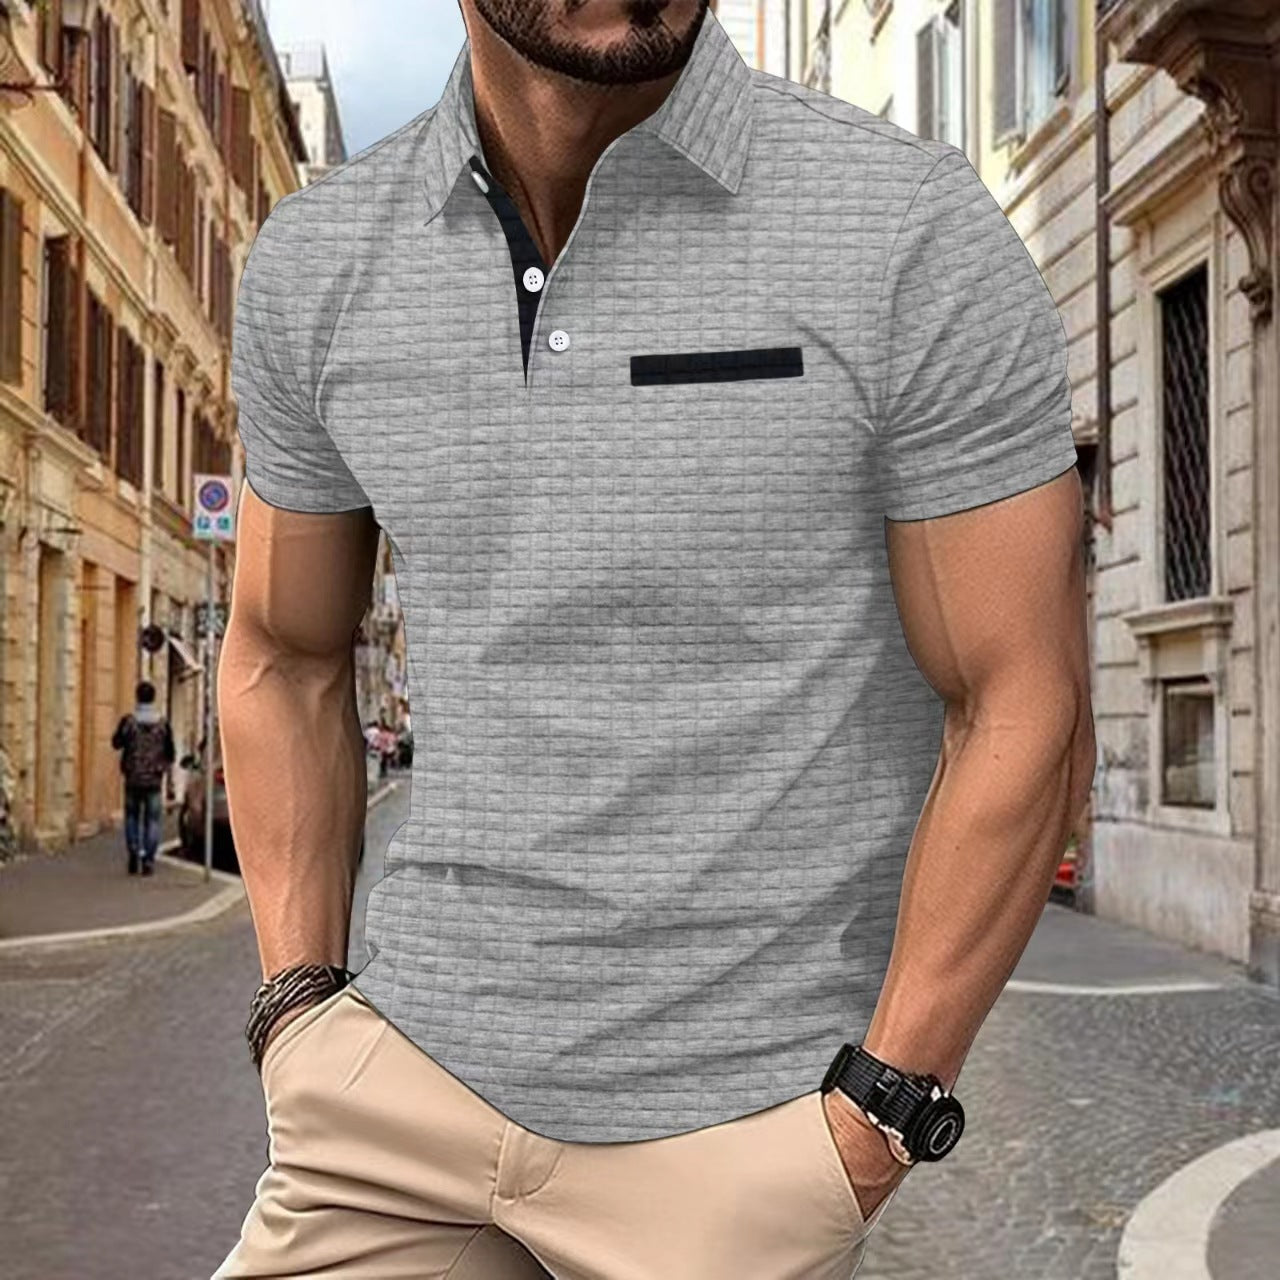 Men T-Shirts- Jacquard Plaid Polo T-Shirt with Elegant Collar for Men's Everyday Style- Light Gray- Chuzko Women Clothing